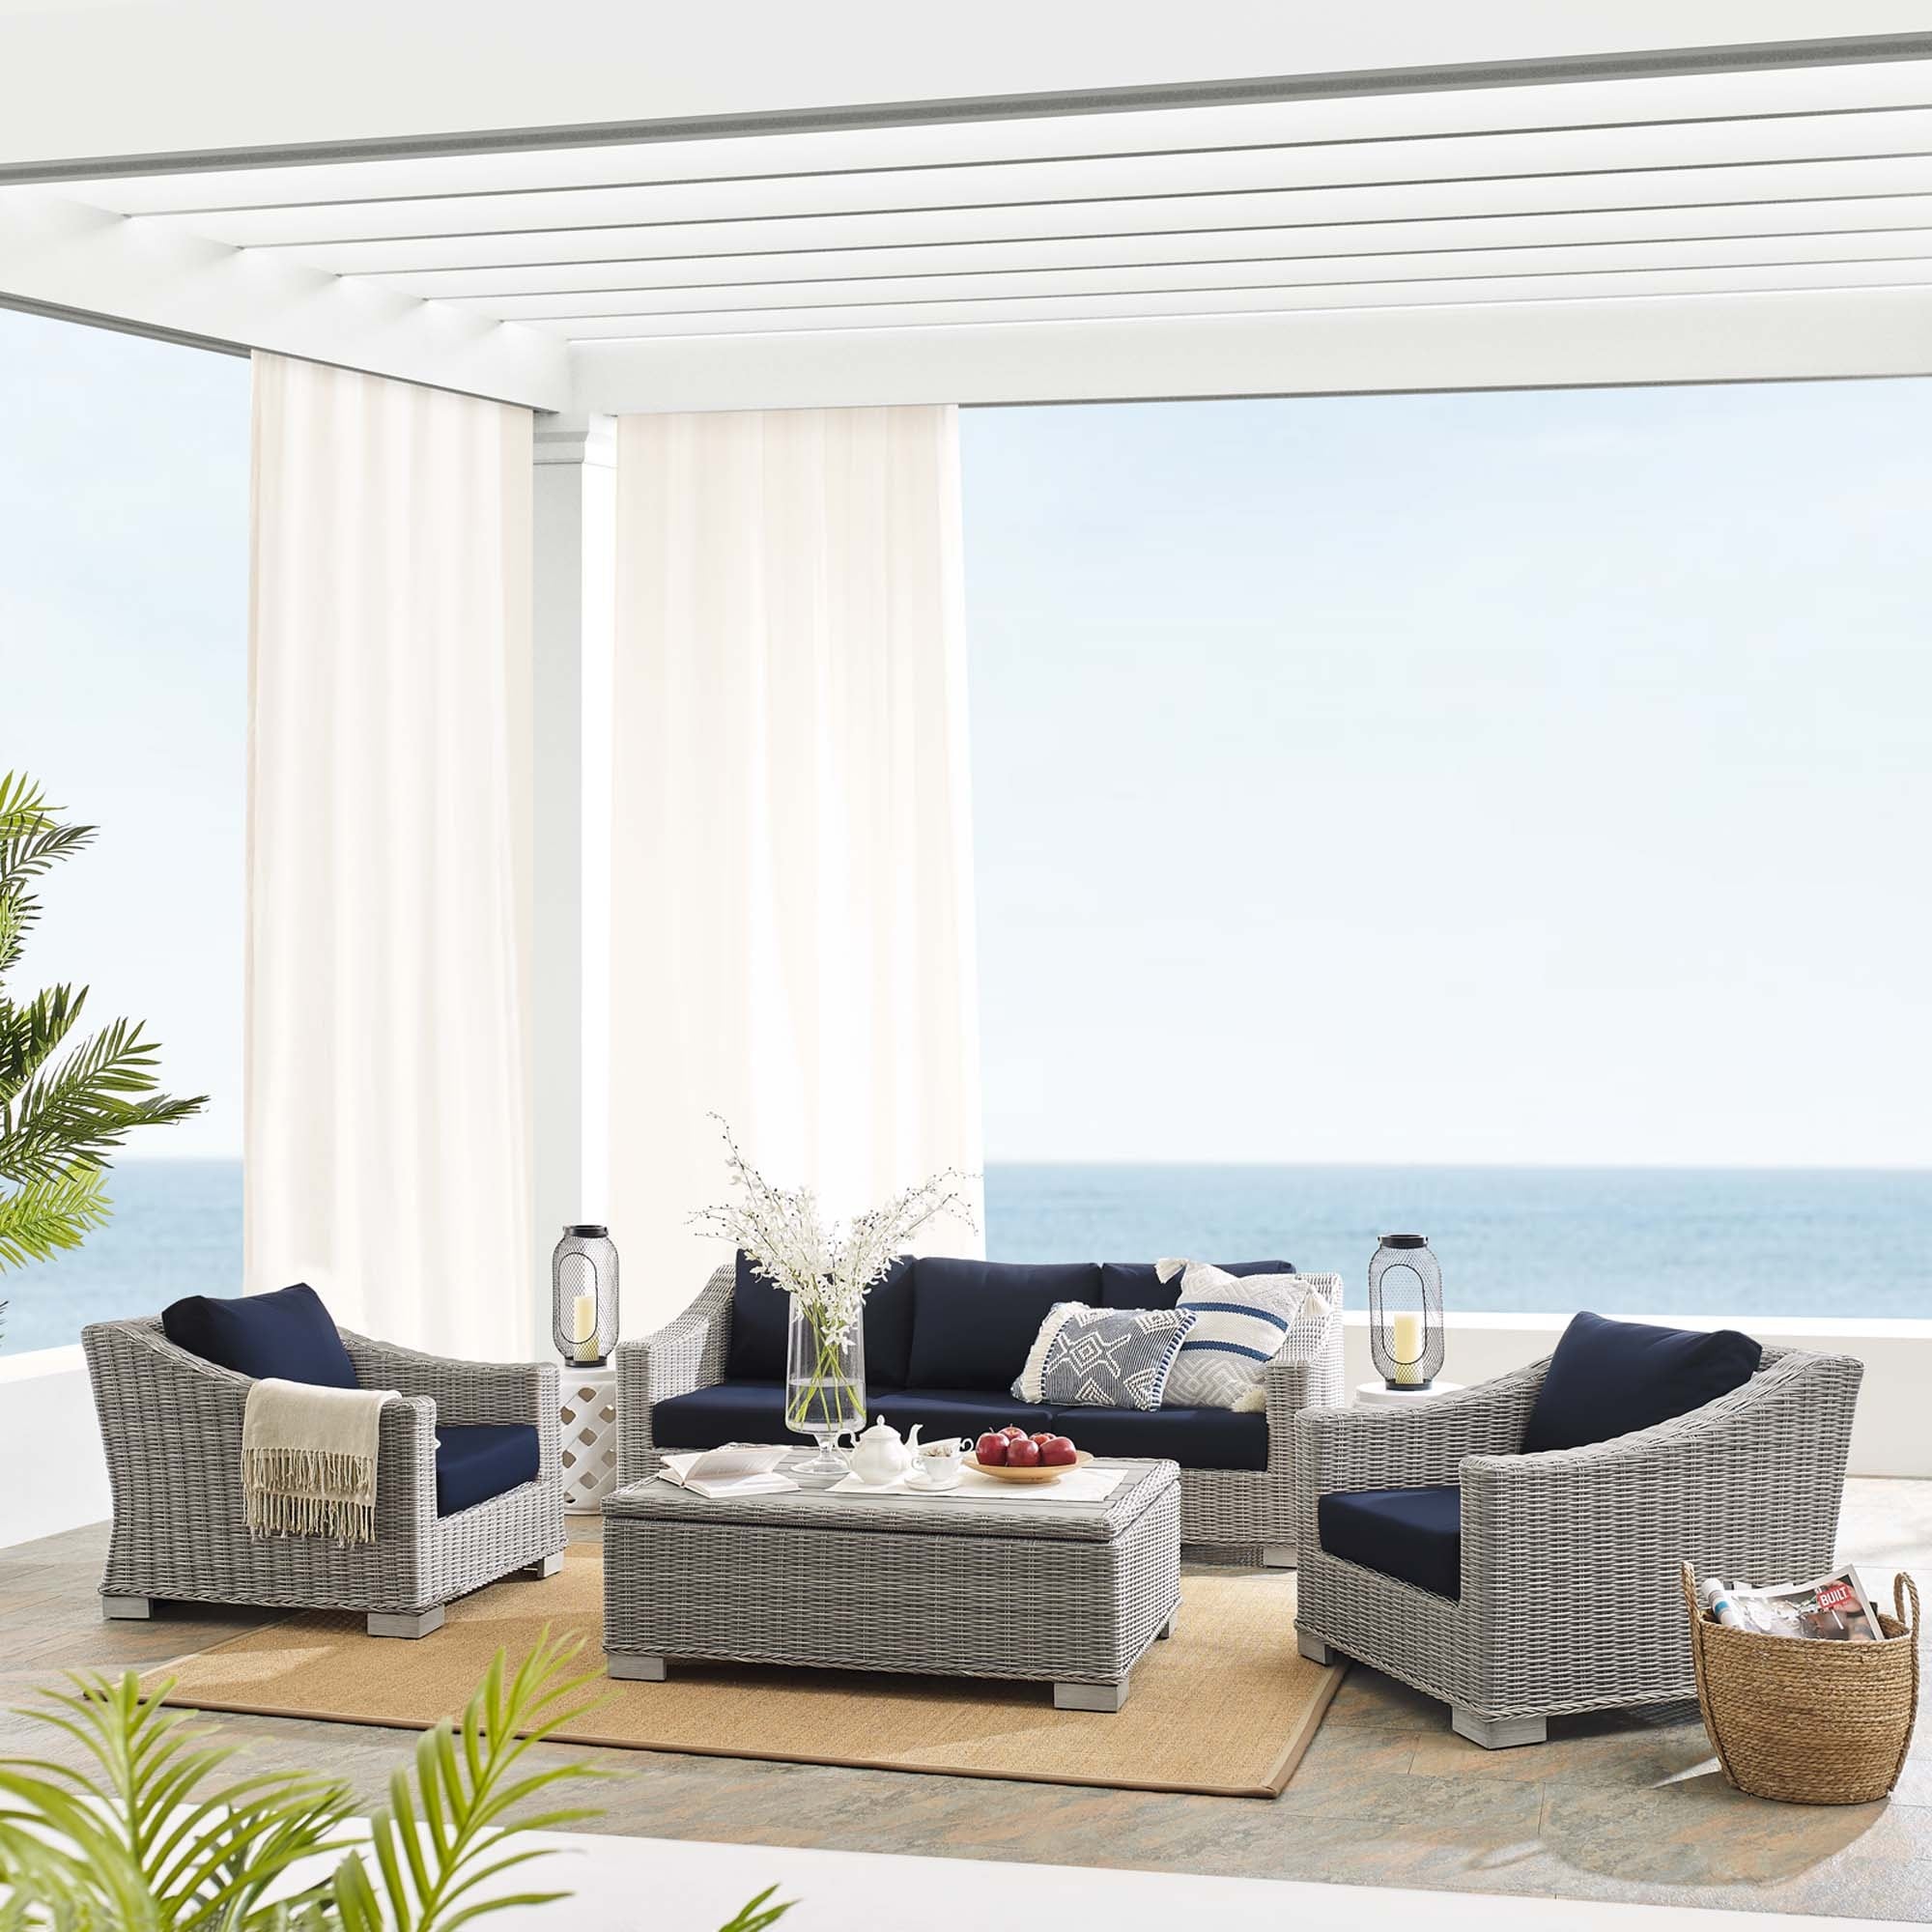 Conway Sunbrellaand Outdoor Patio Wicker Rattan 4-piece Furniture Set